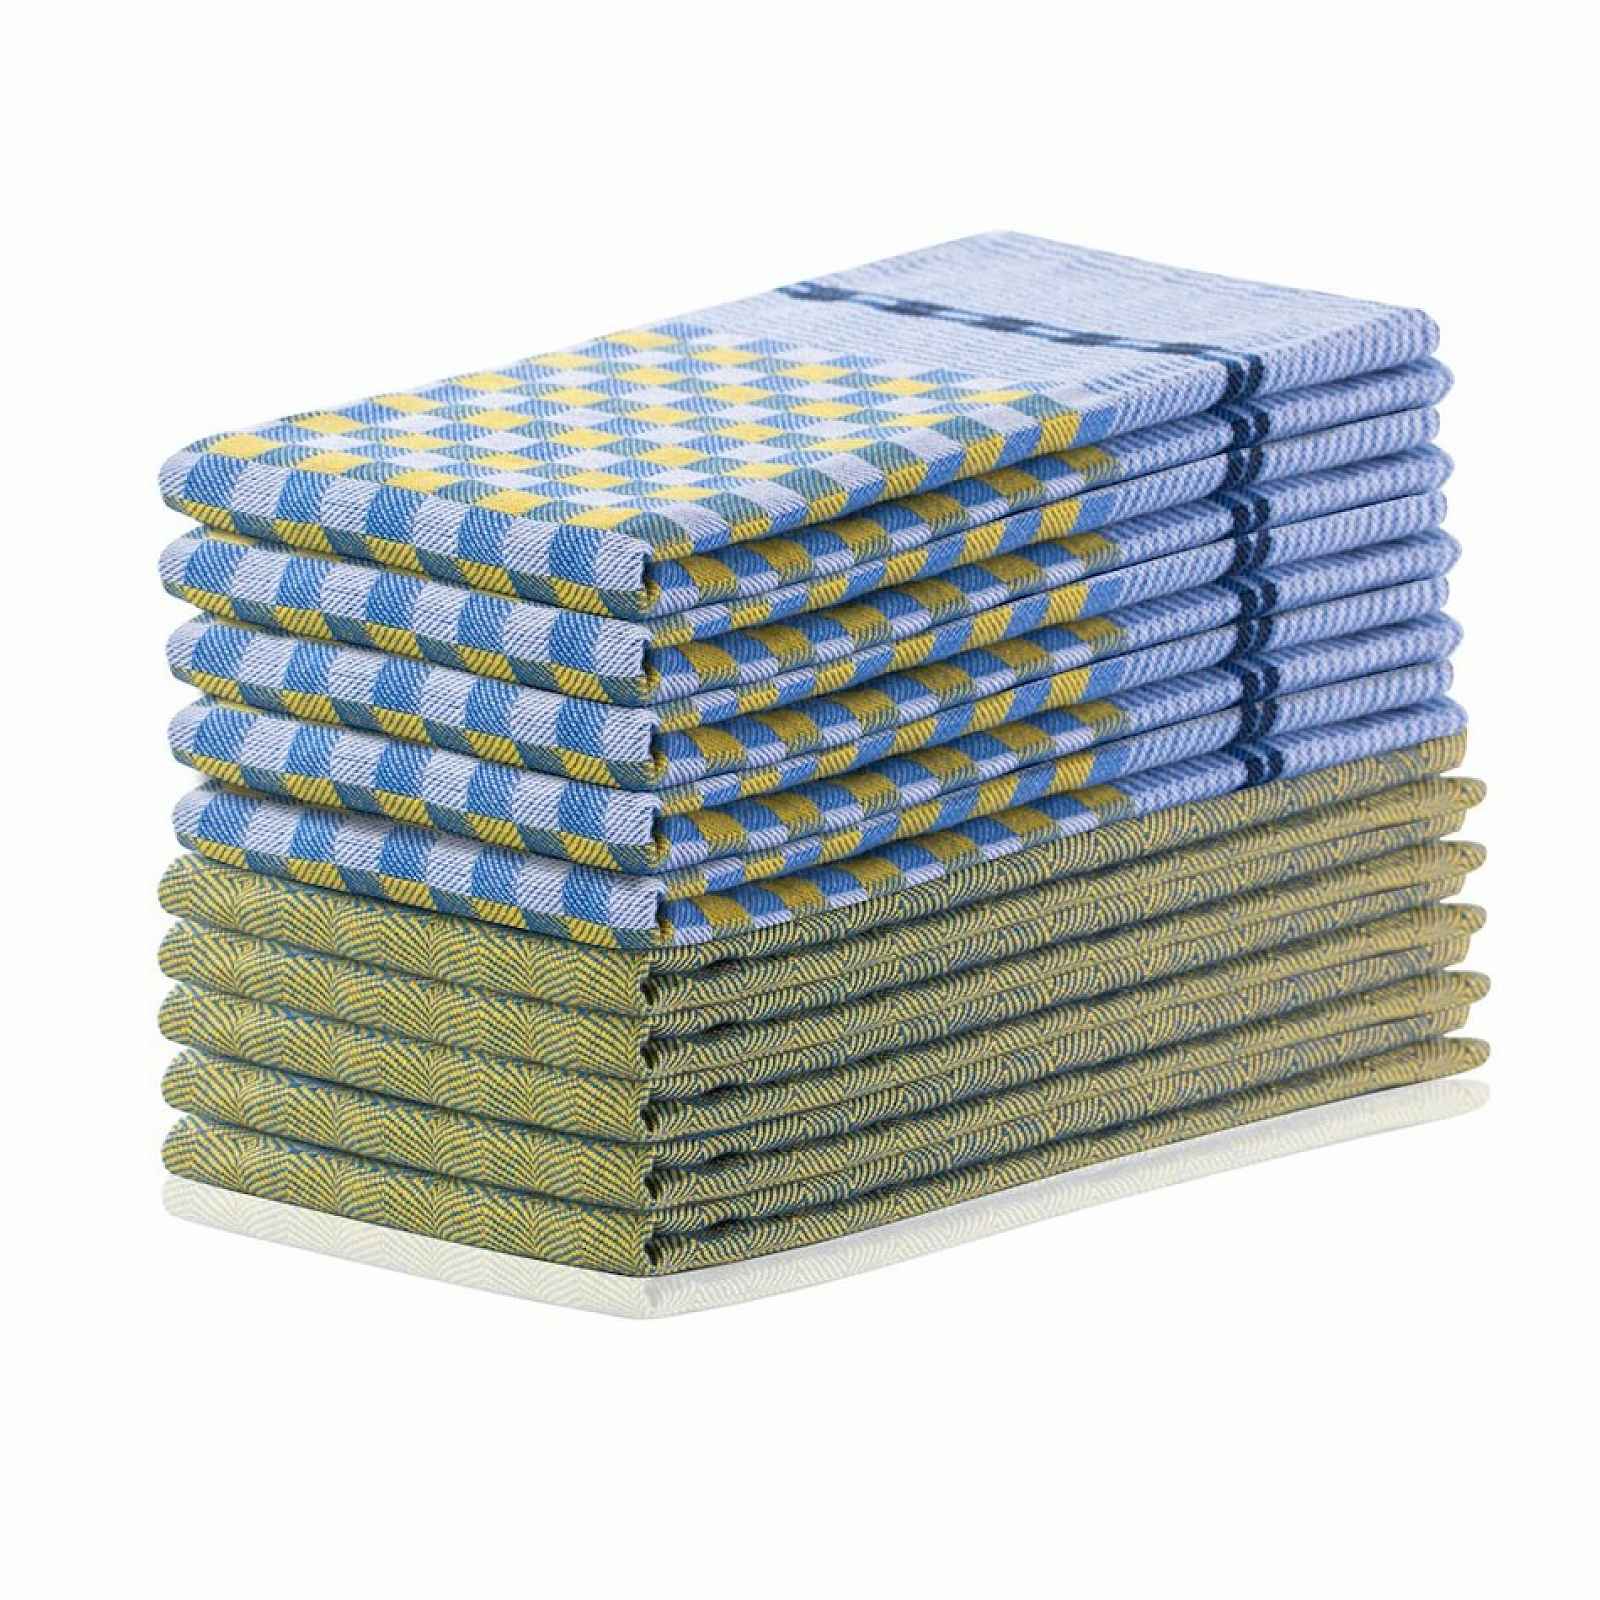 Sada 10 žluto-modrých bavlněných utěrek DecoKing Louie, 50 x 70 cm